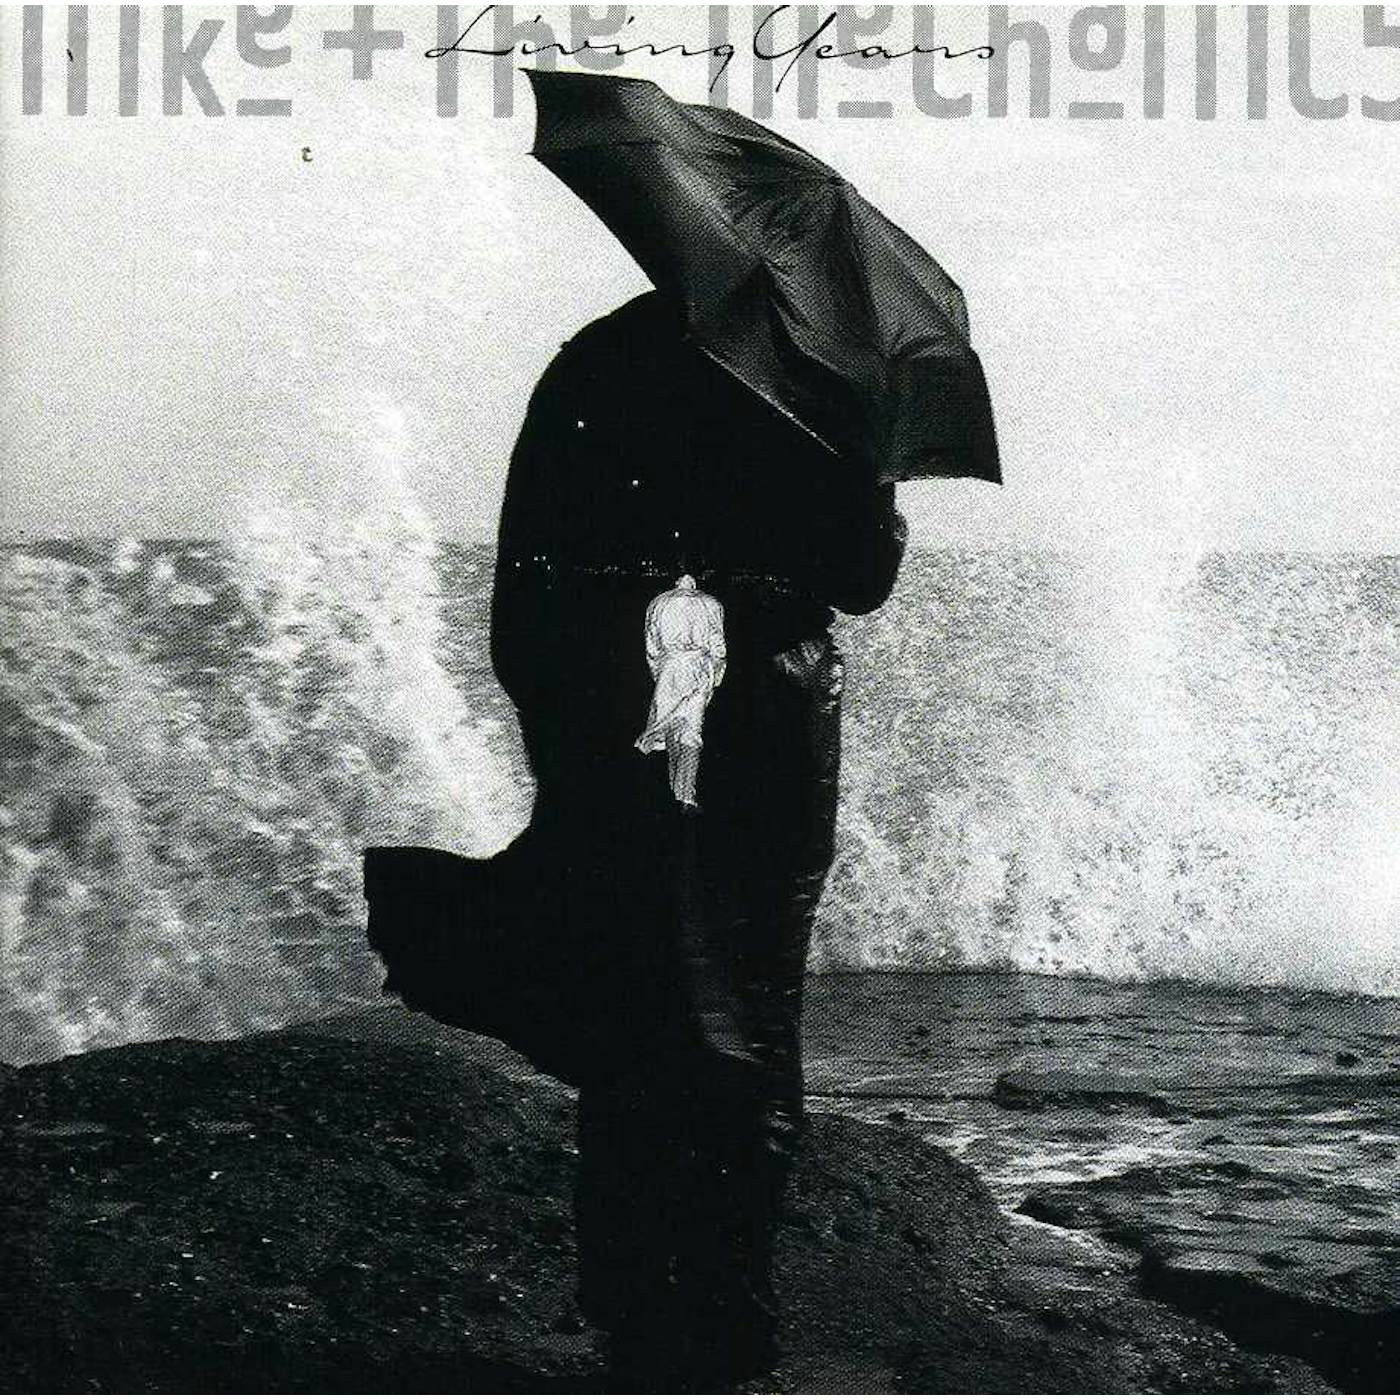 Mike + The Mechanics LIVING YEARS CD